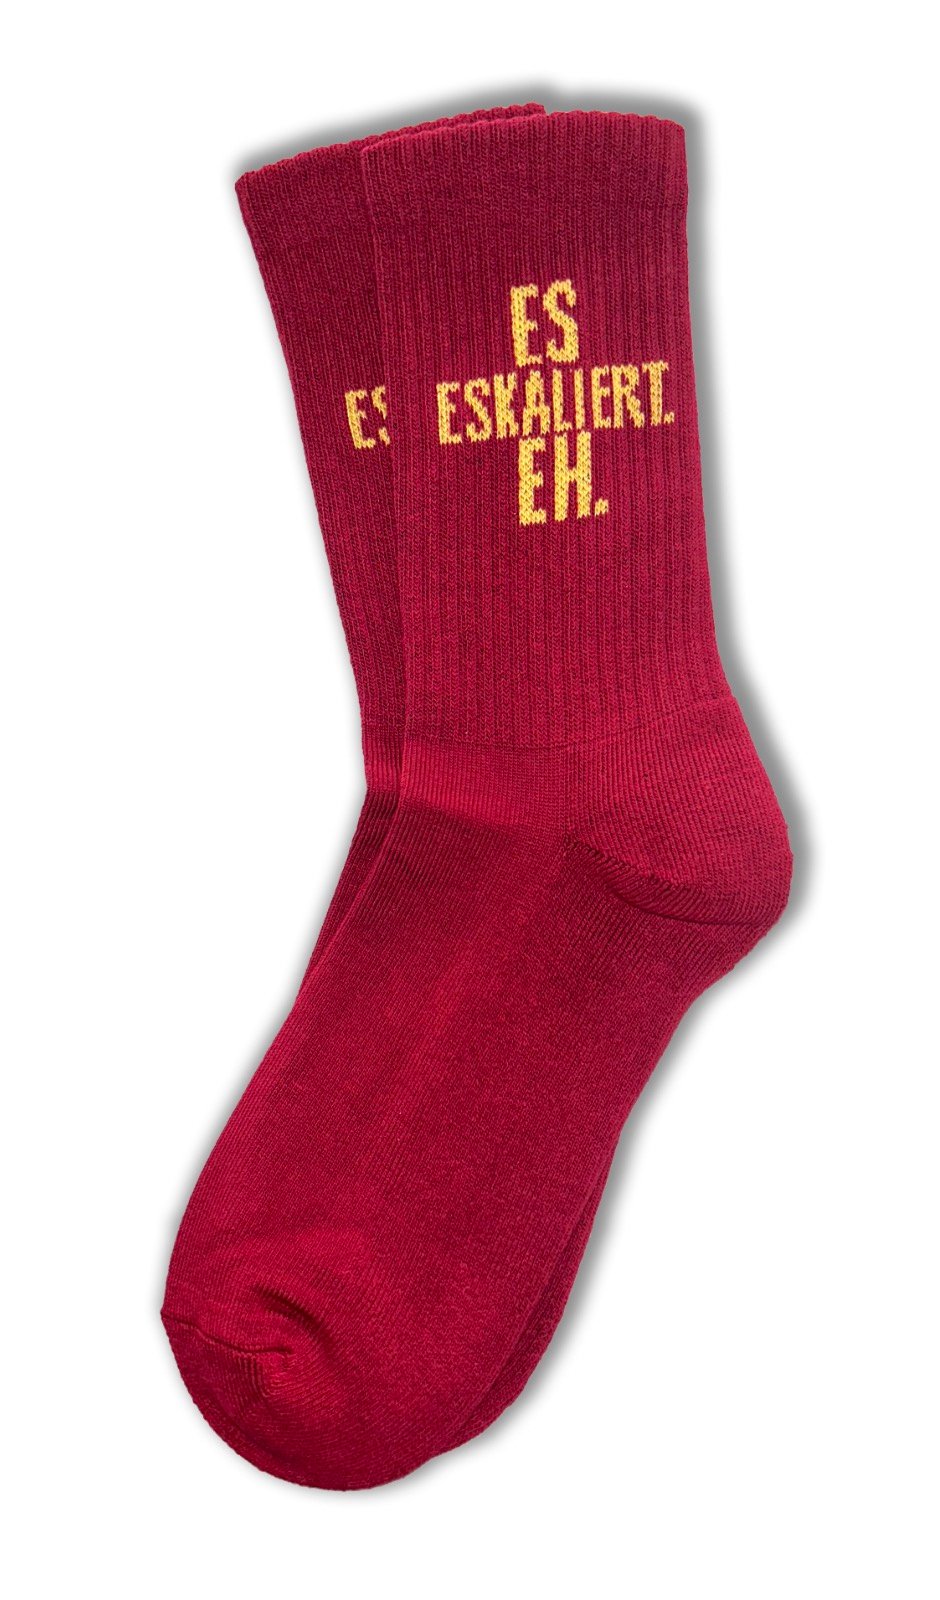 Image of Robinson's Bar "Es Eskaliert Eh" Socken (red)